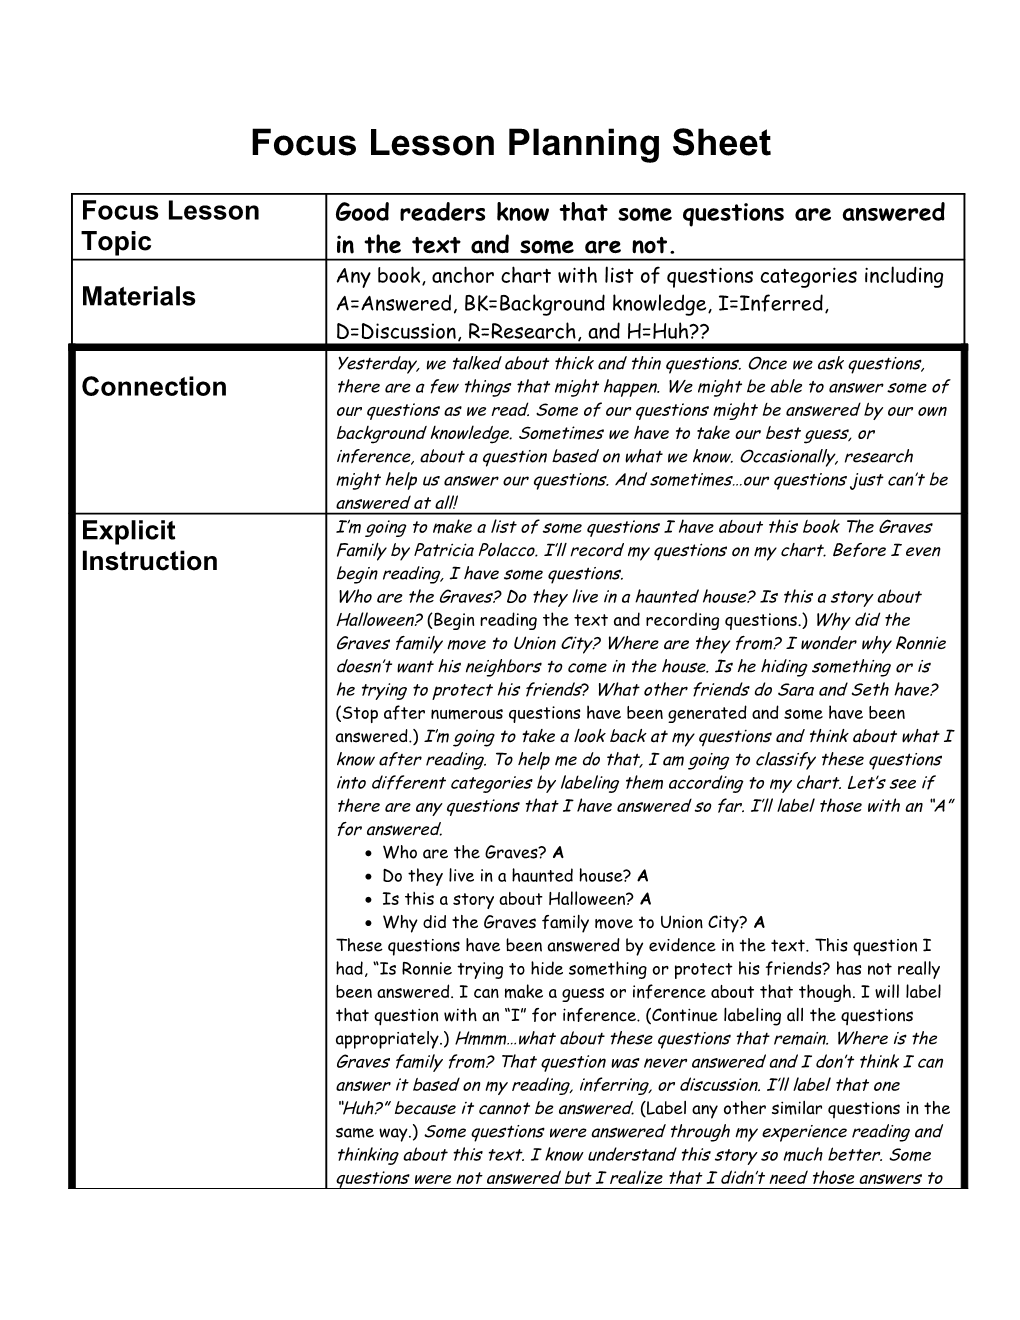 Focus Lesson Planning Sheet s7